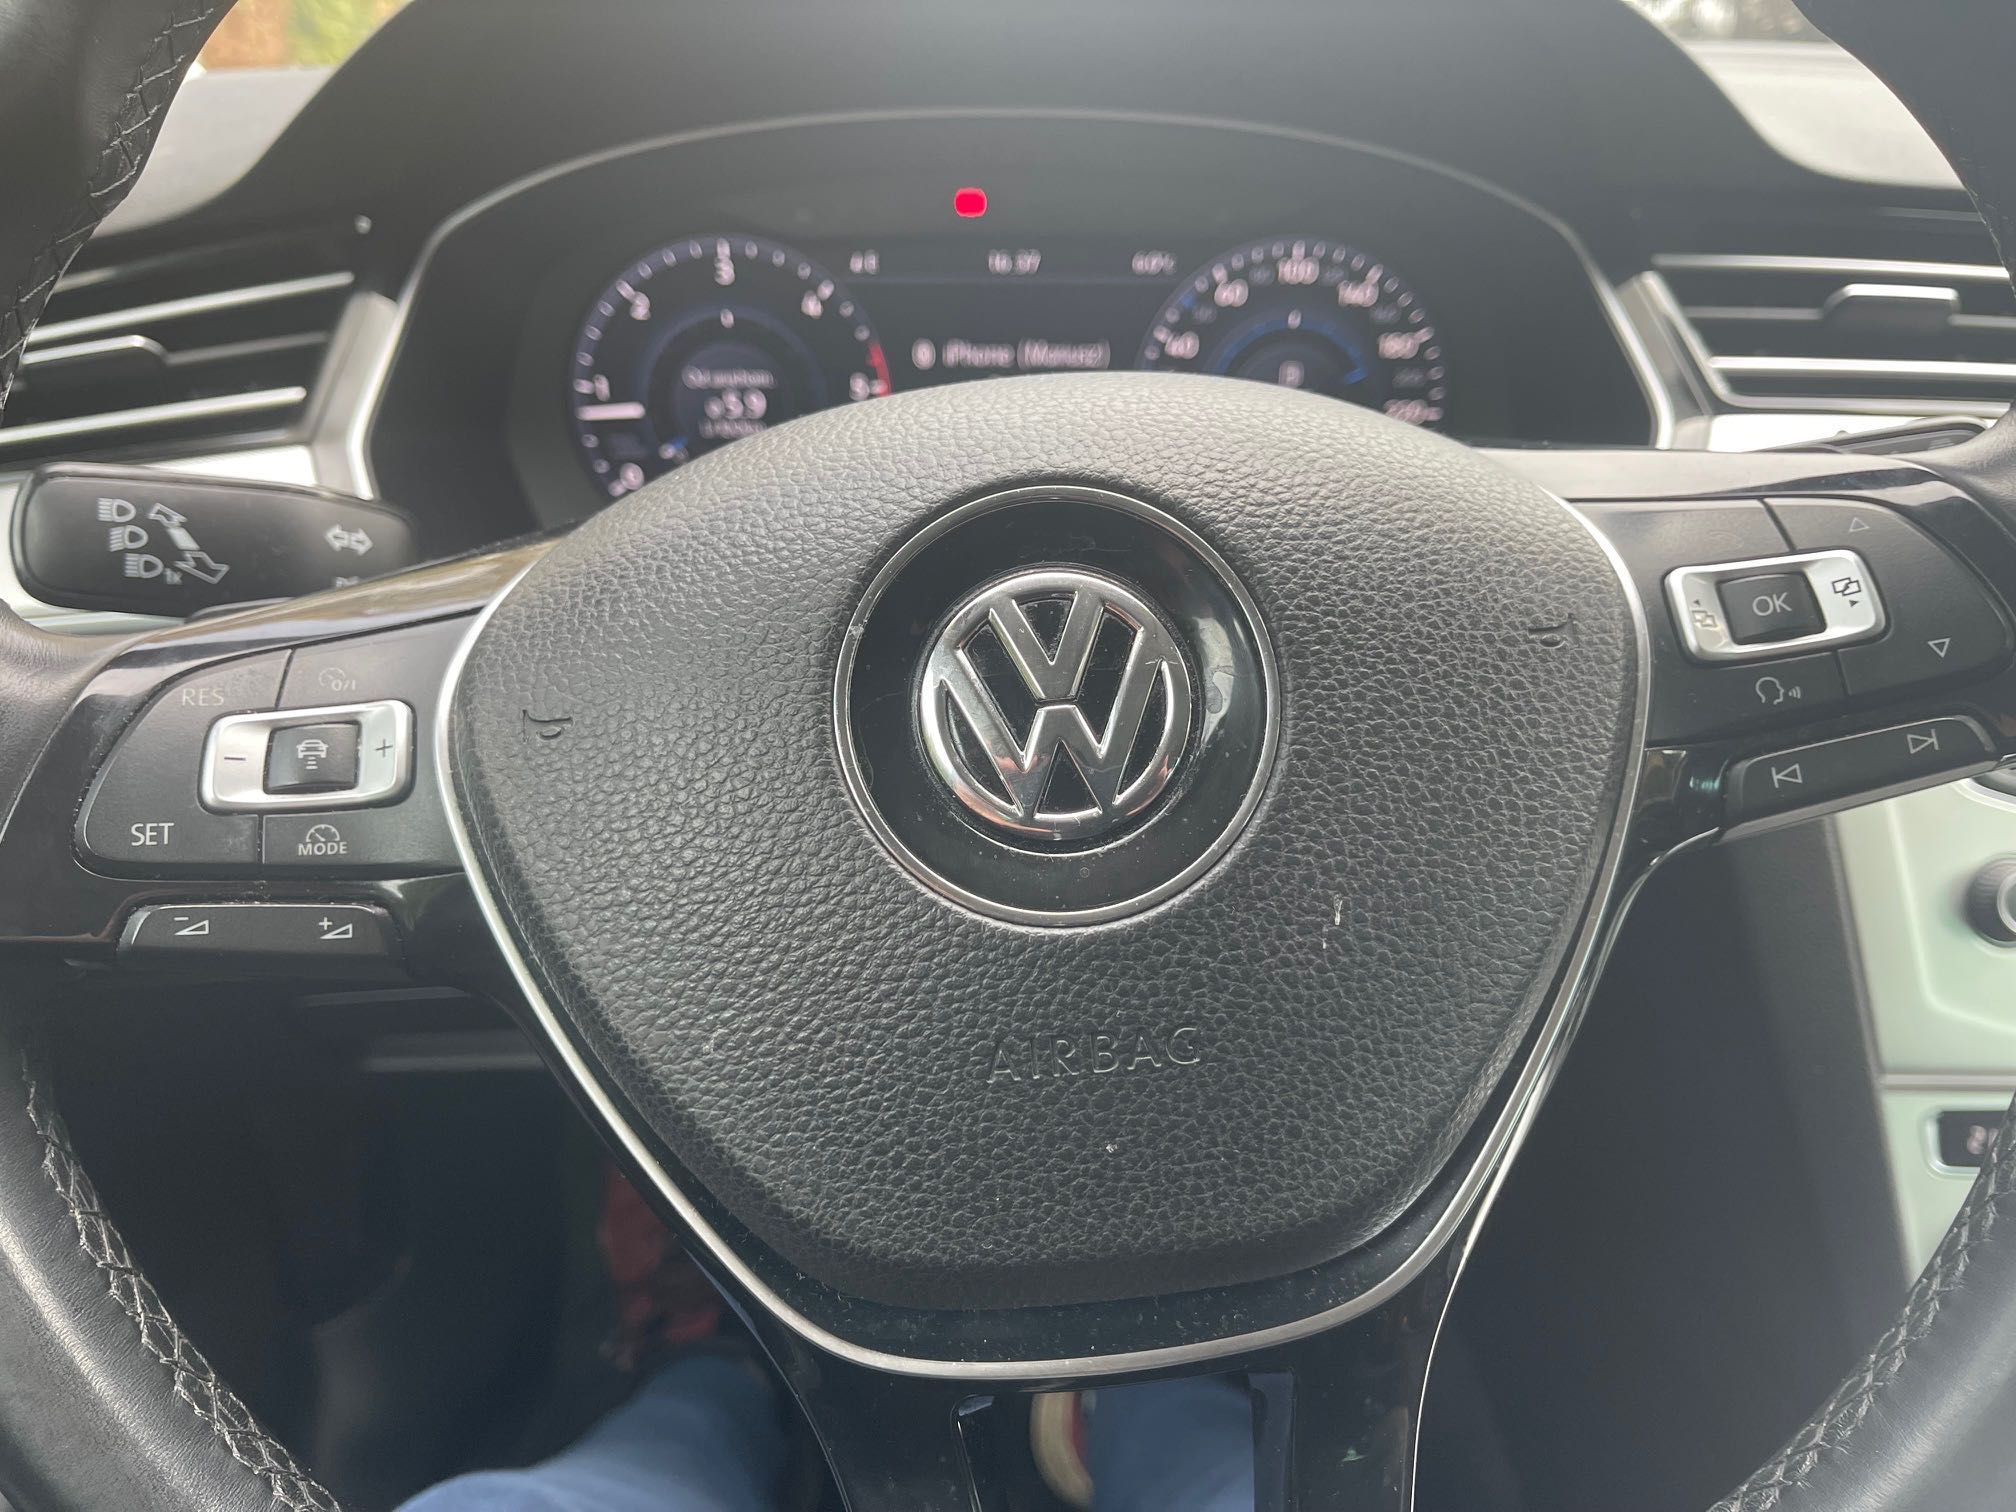 VW Passat, B8, 150 KM, 2016 rok, salon Polska, jedyny użytkownik